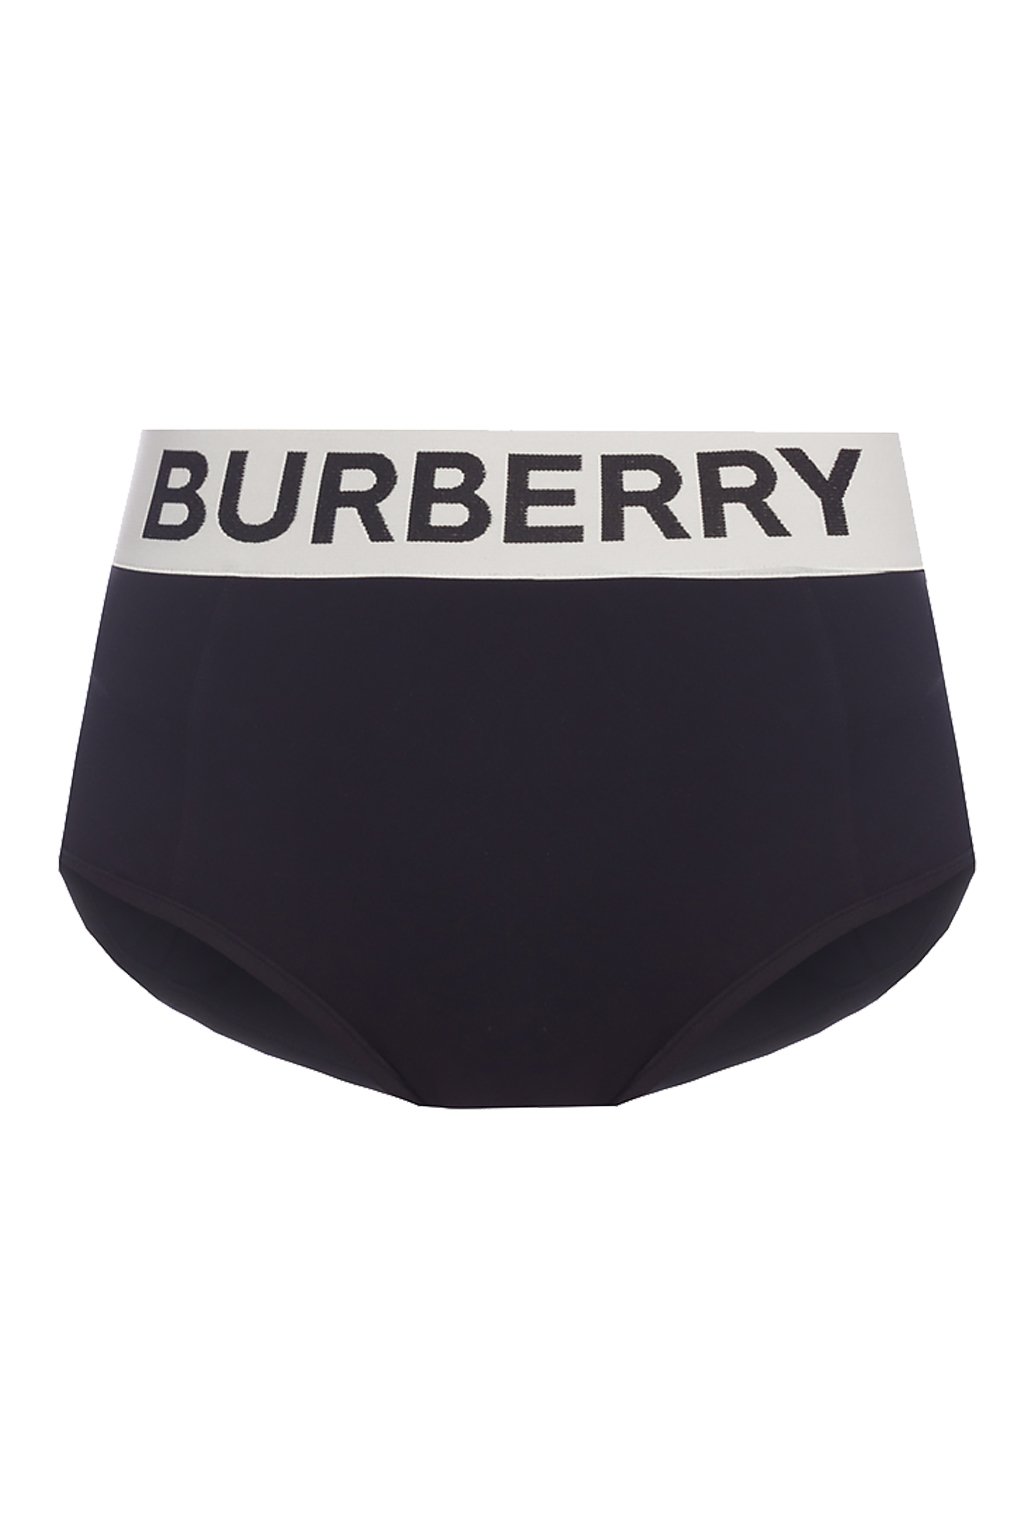 Burberry Logo panties | Women's Clothing | Vitkac